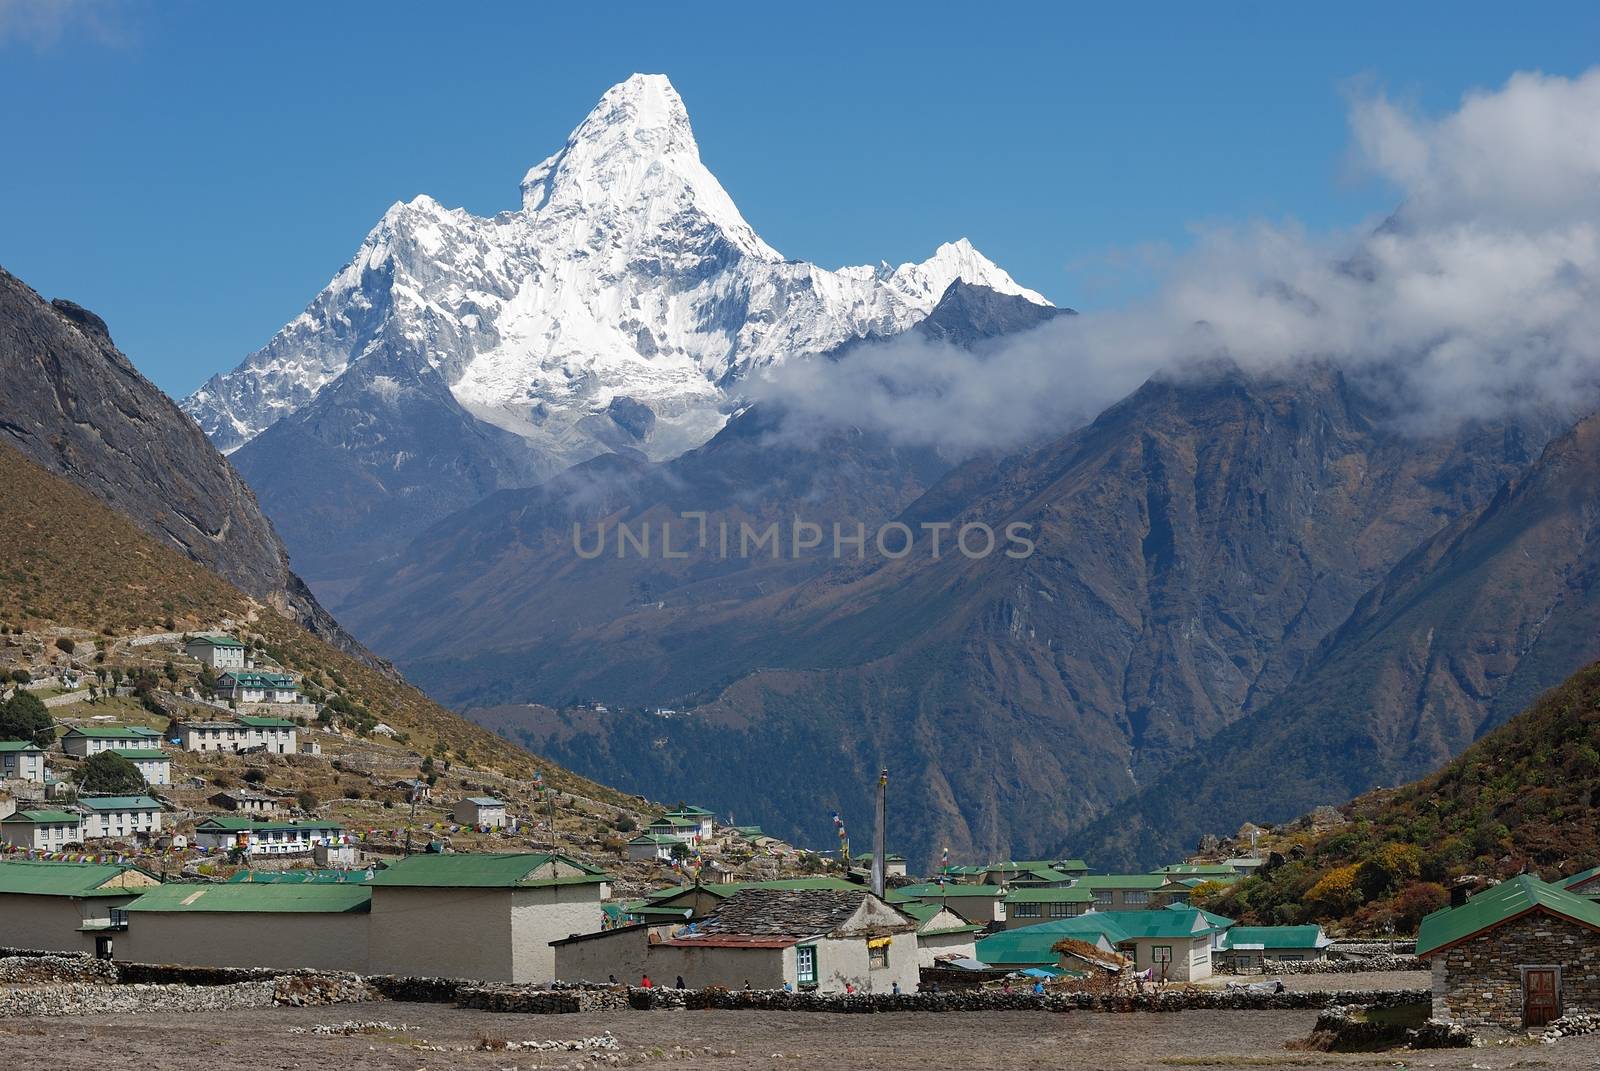 Khumjung village and Ama Dablam (6814 m) peak in Nepal by Borodin